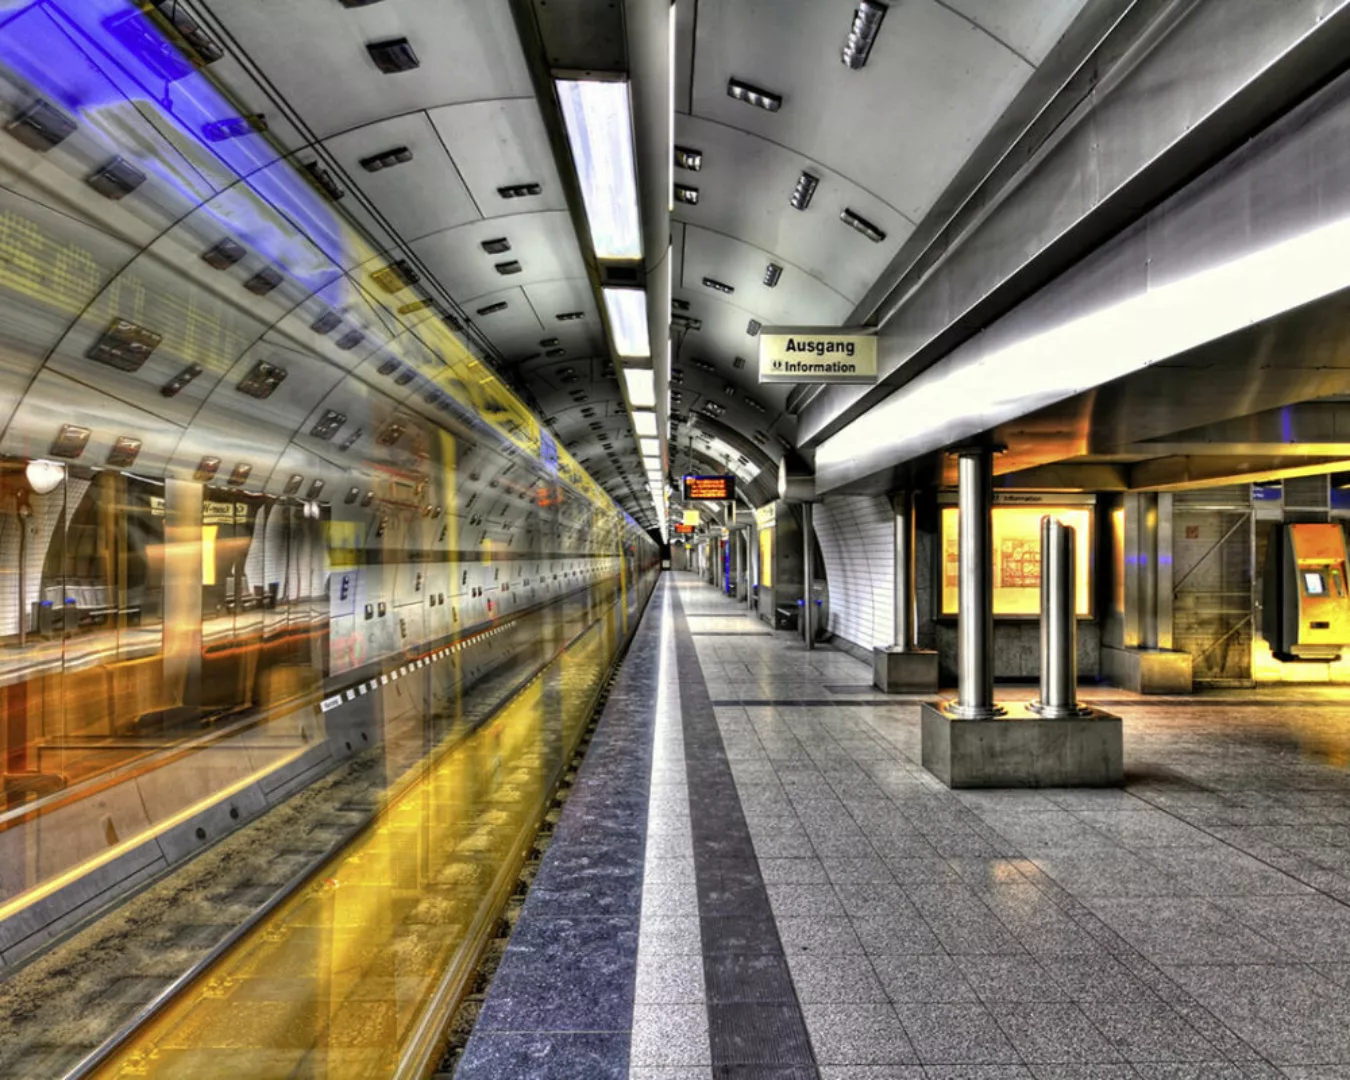 Fototapete "U-Bahnstation" 4,00x2,50 m / Glattvlies Brillant günstig online kaufen